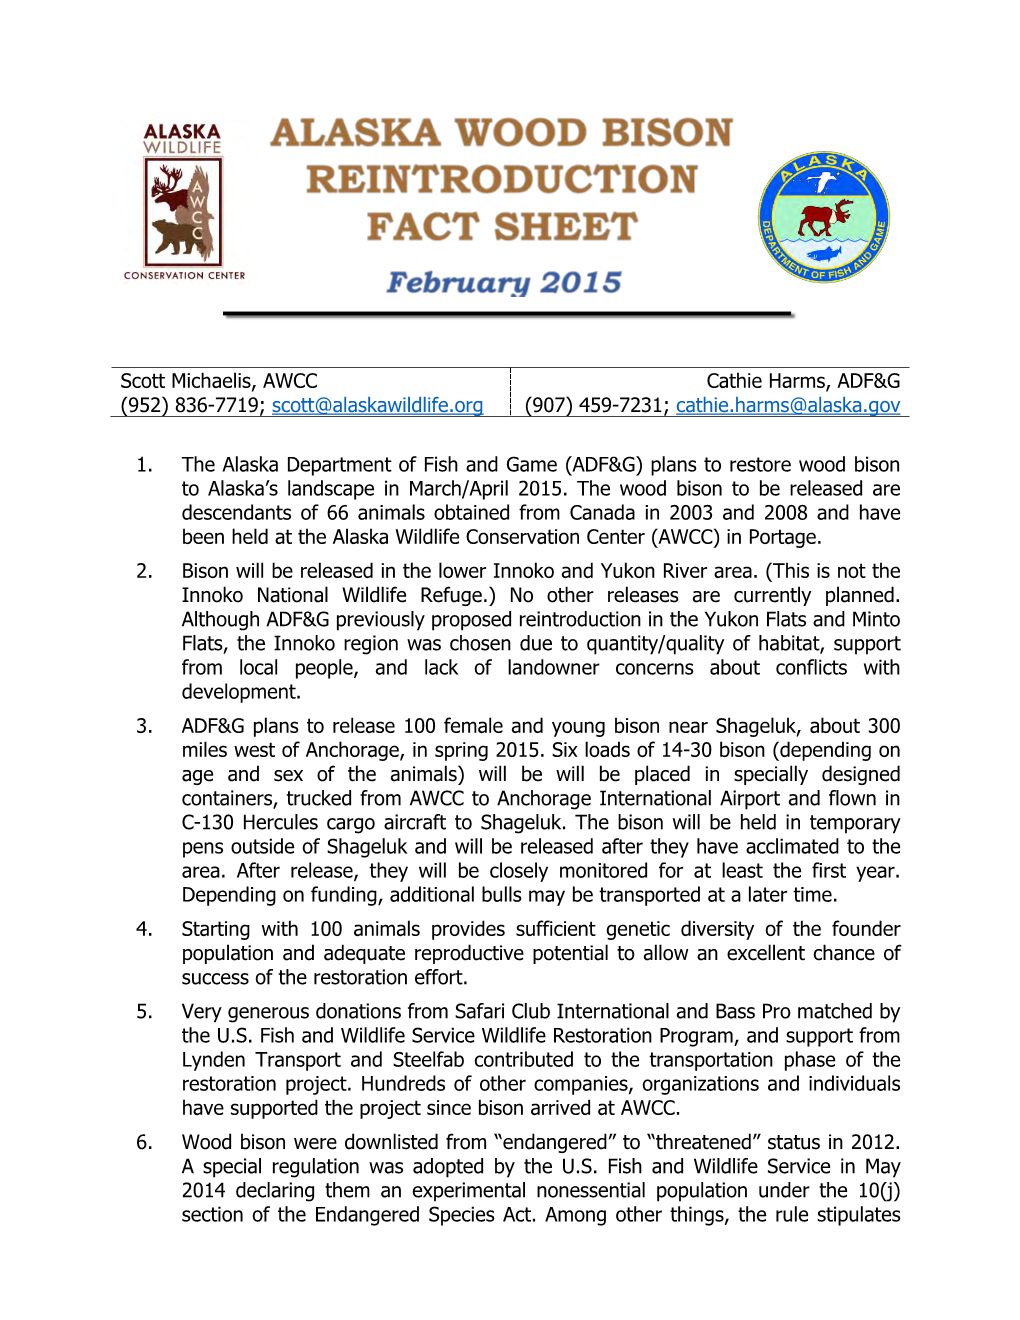 Alaska Wood Bison Reintroduction Fact Sheet